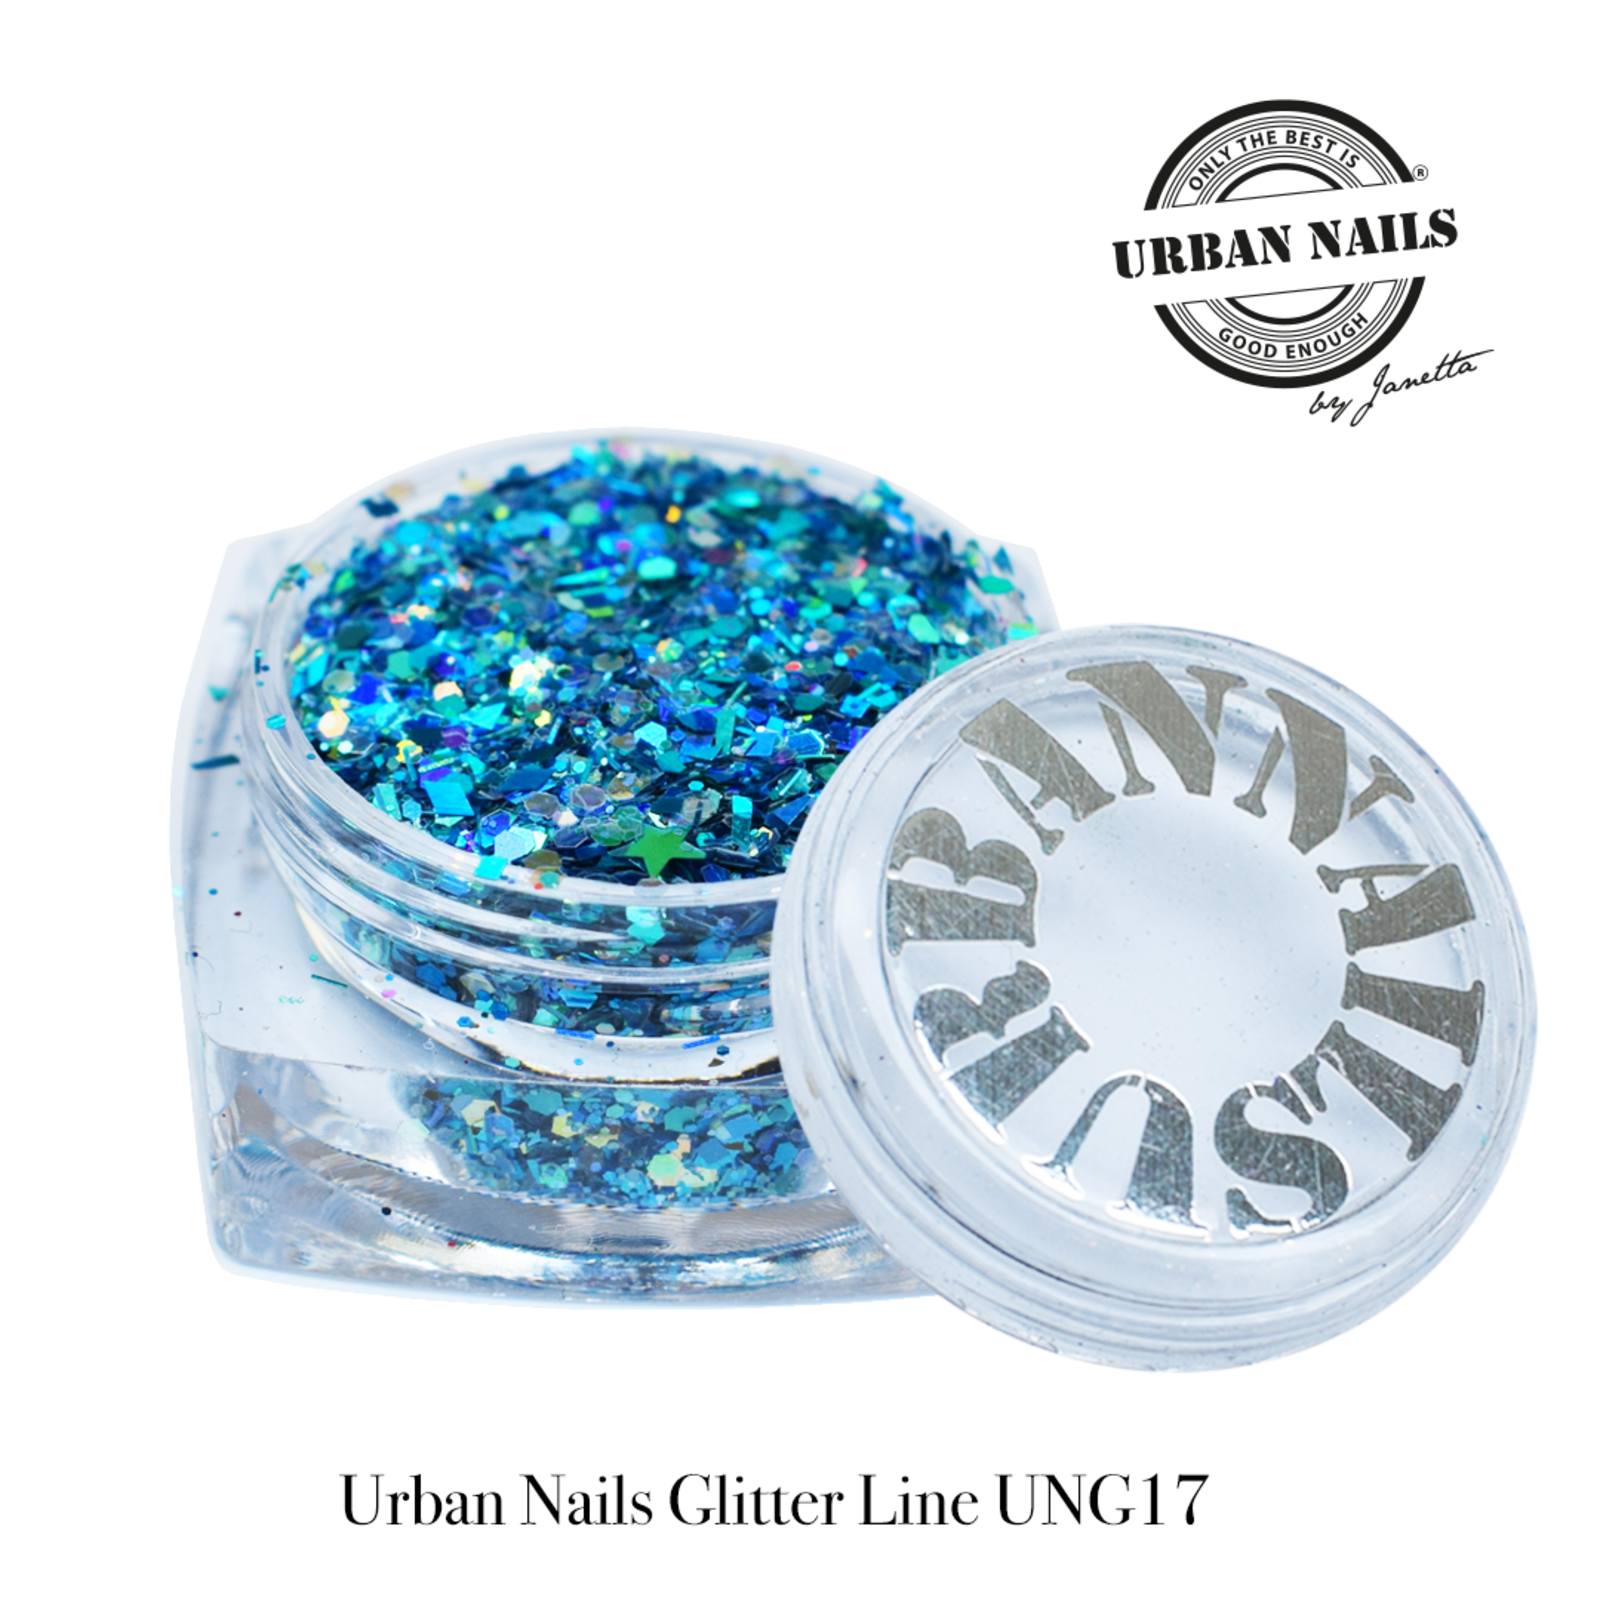 Urban nails Glitter Line UNG17